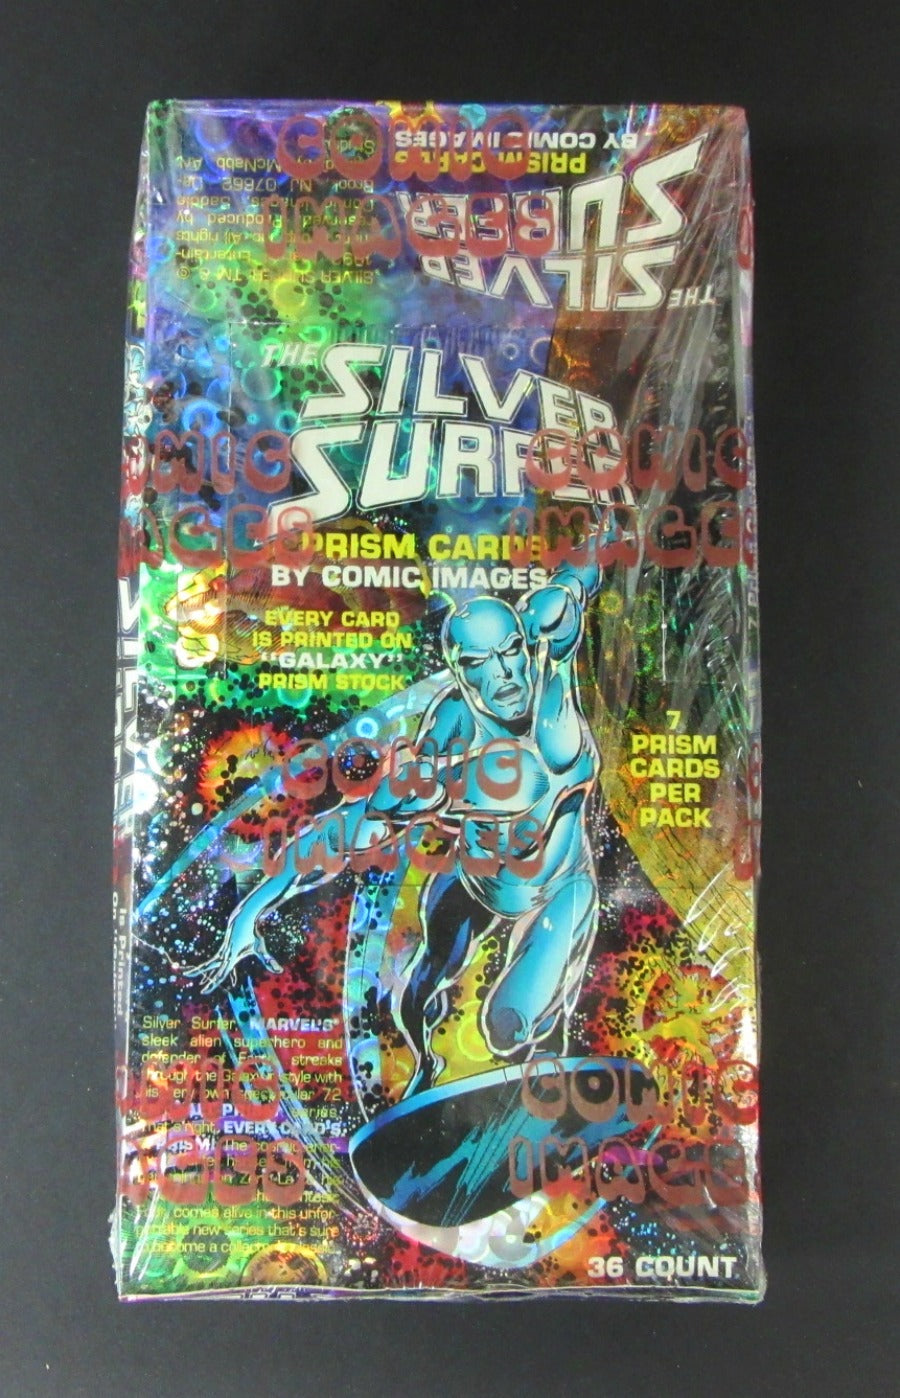 1992 Comic Images Silver Surfer Prism Cards Box